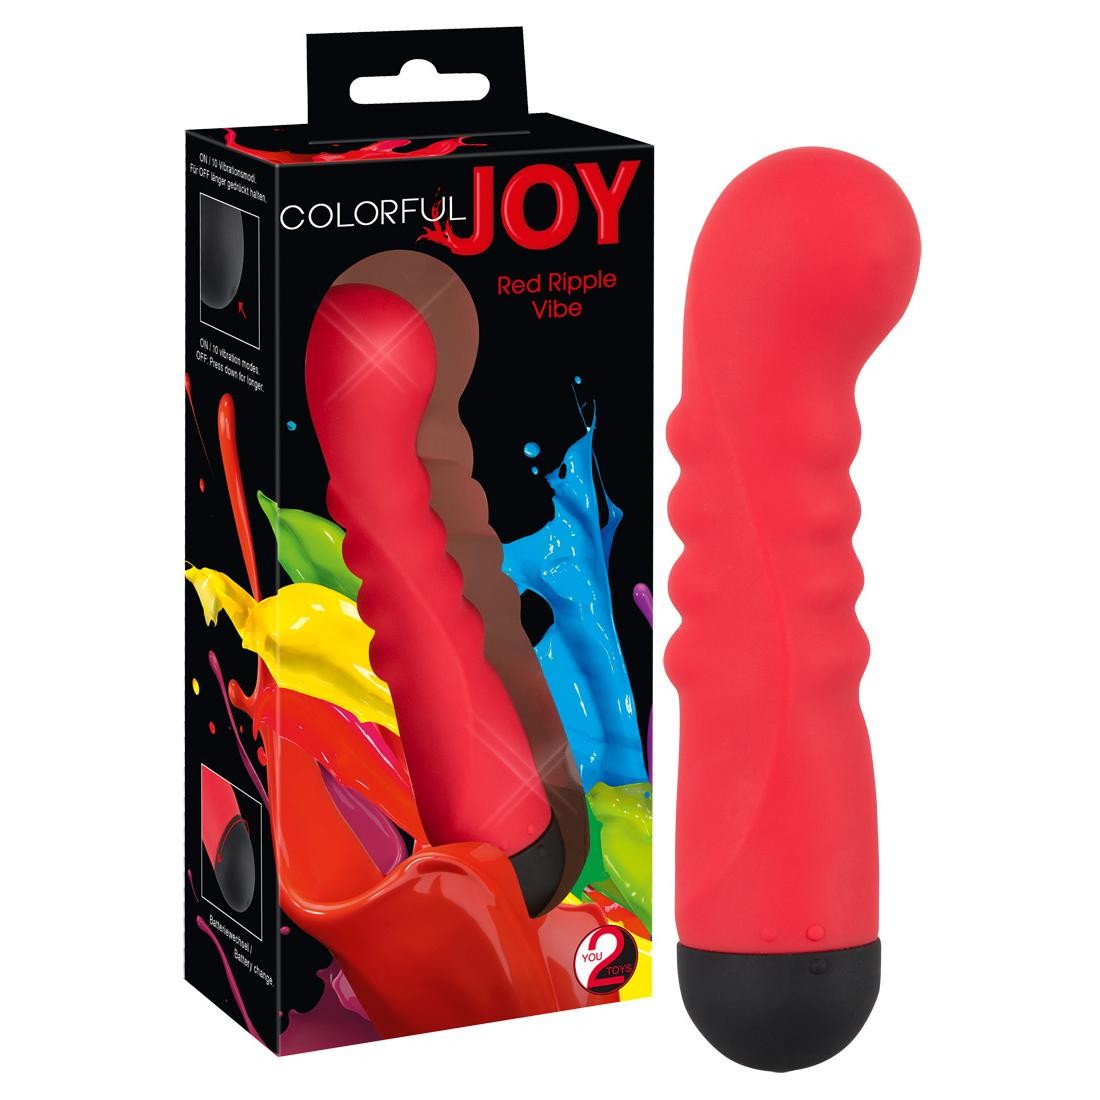  You2Toys  -  Colorful  Joy  Red  Ripple  Vibe  -  Vibrator 